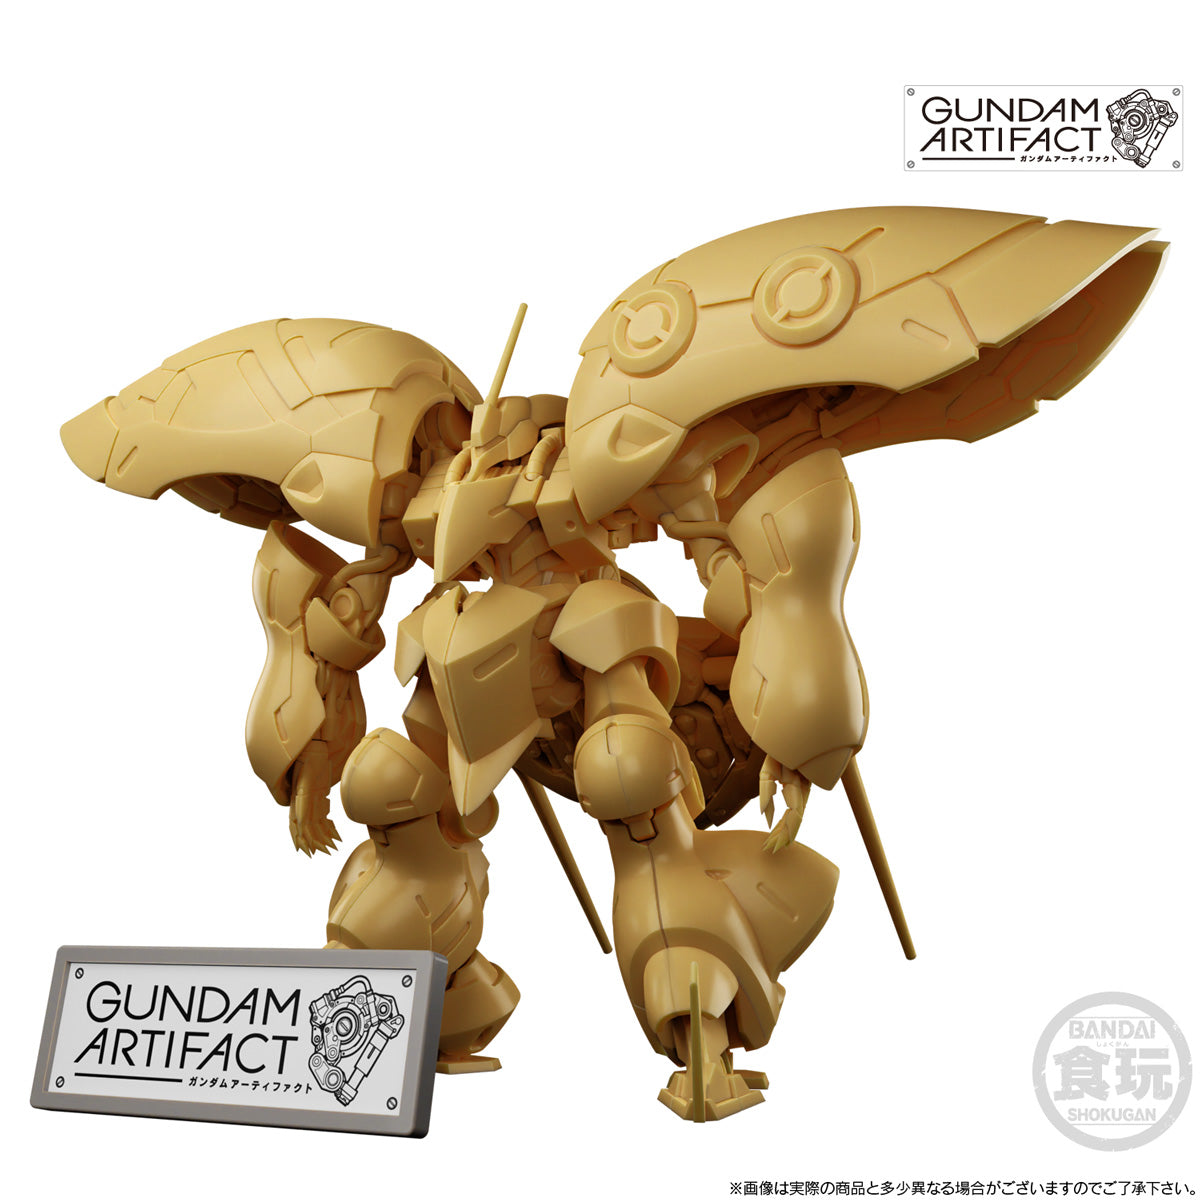 Limited Shokugan Gundam Artifact GUNDAM ARTIFACT “MASS-PRODUCED QUBELEY・QUBELEY COMPATIBLE 3 PIECES SET”